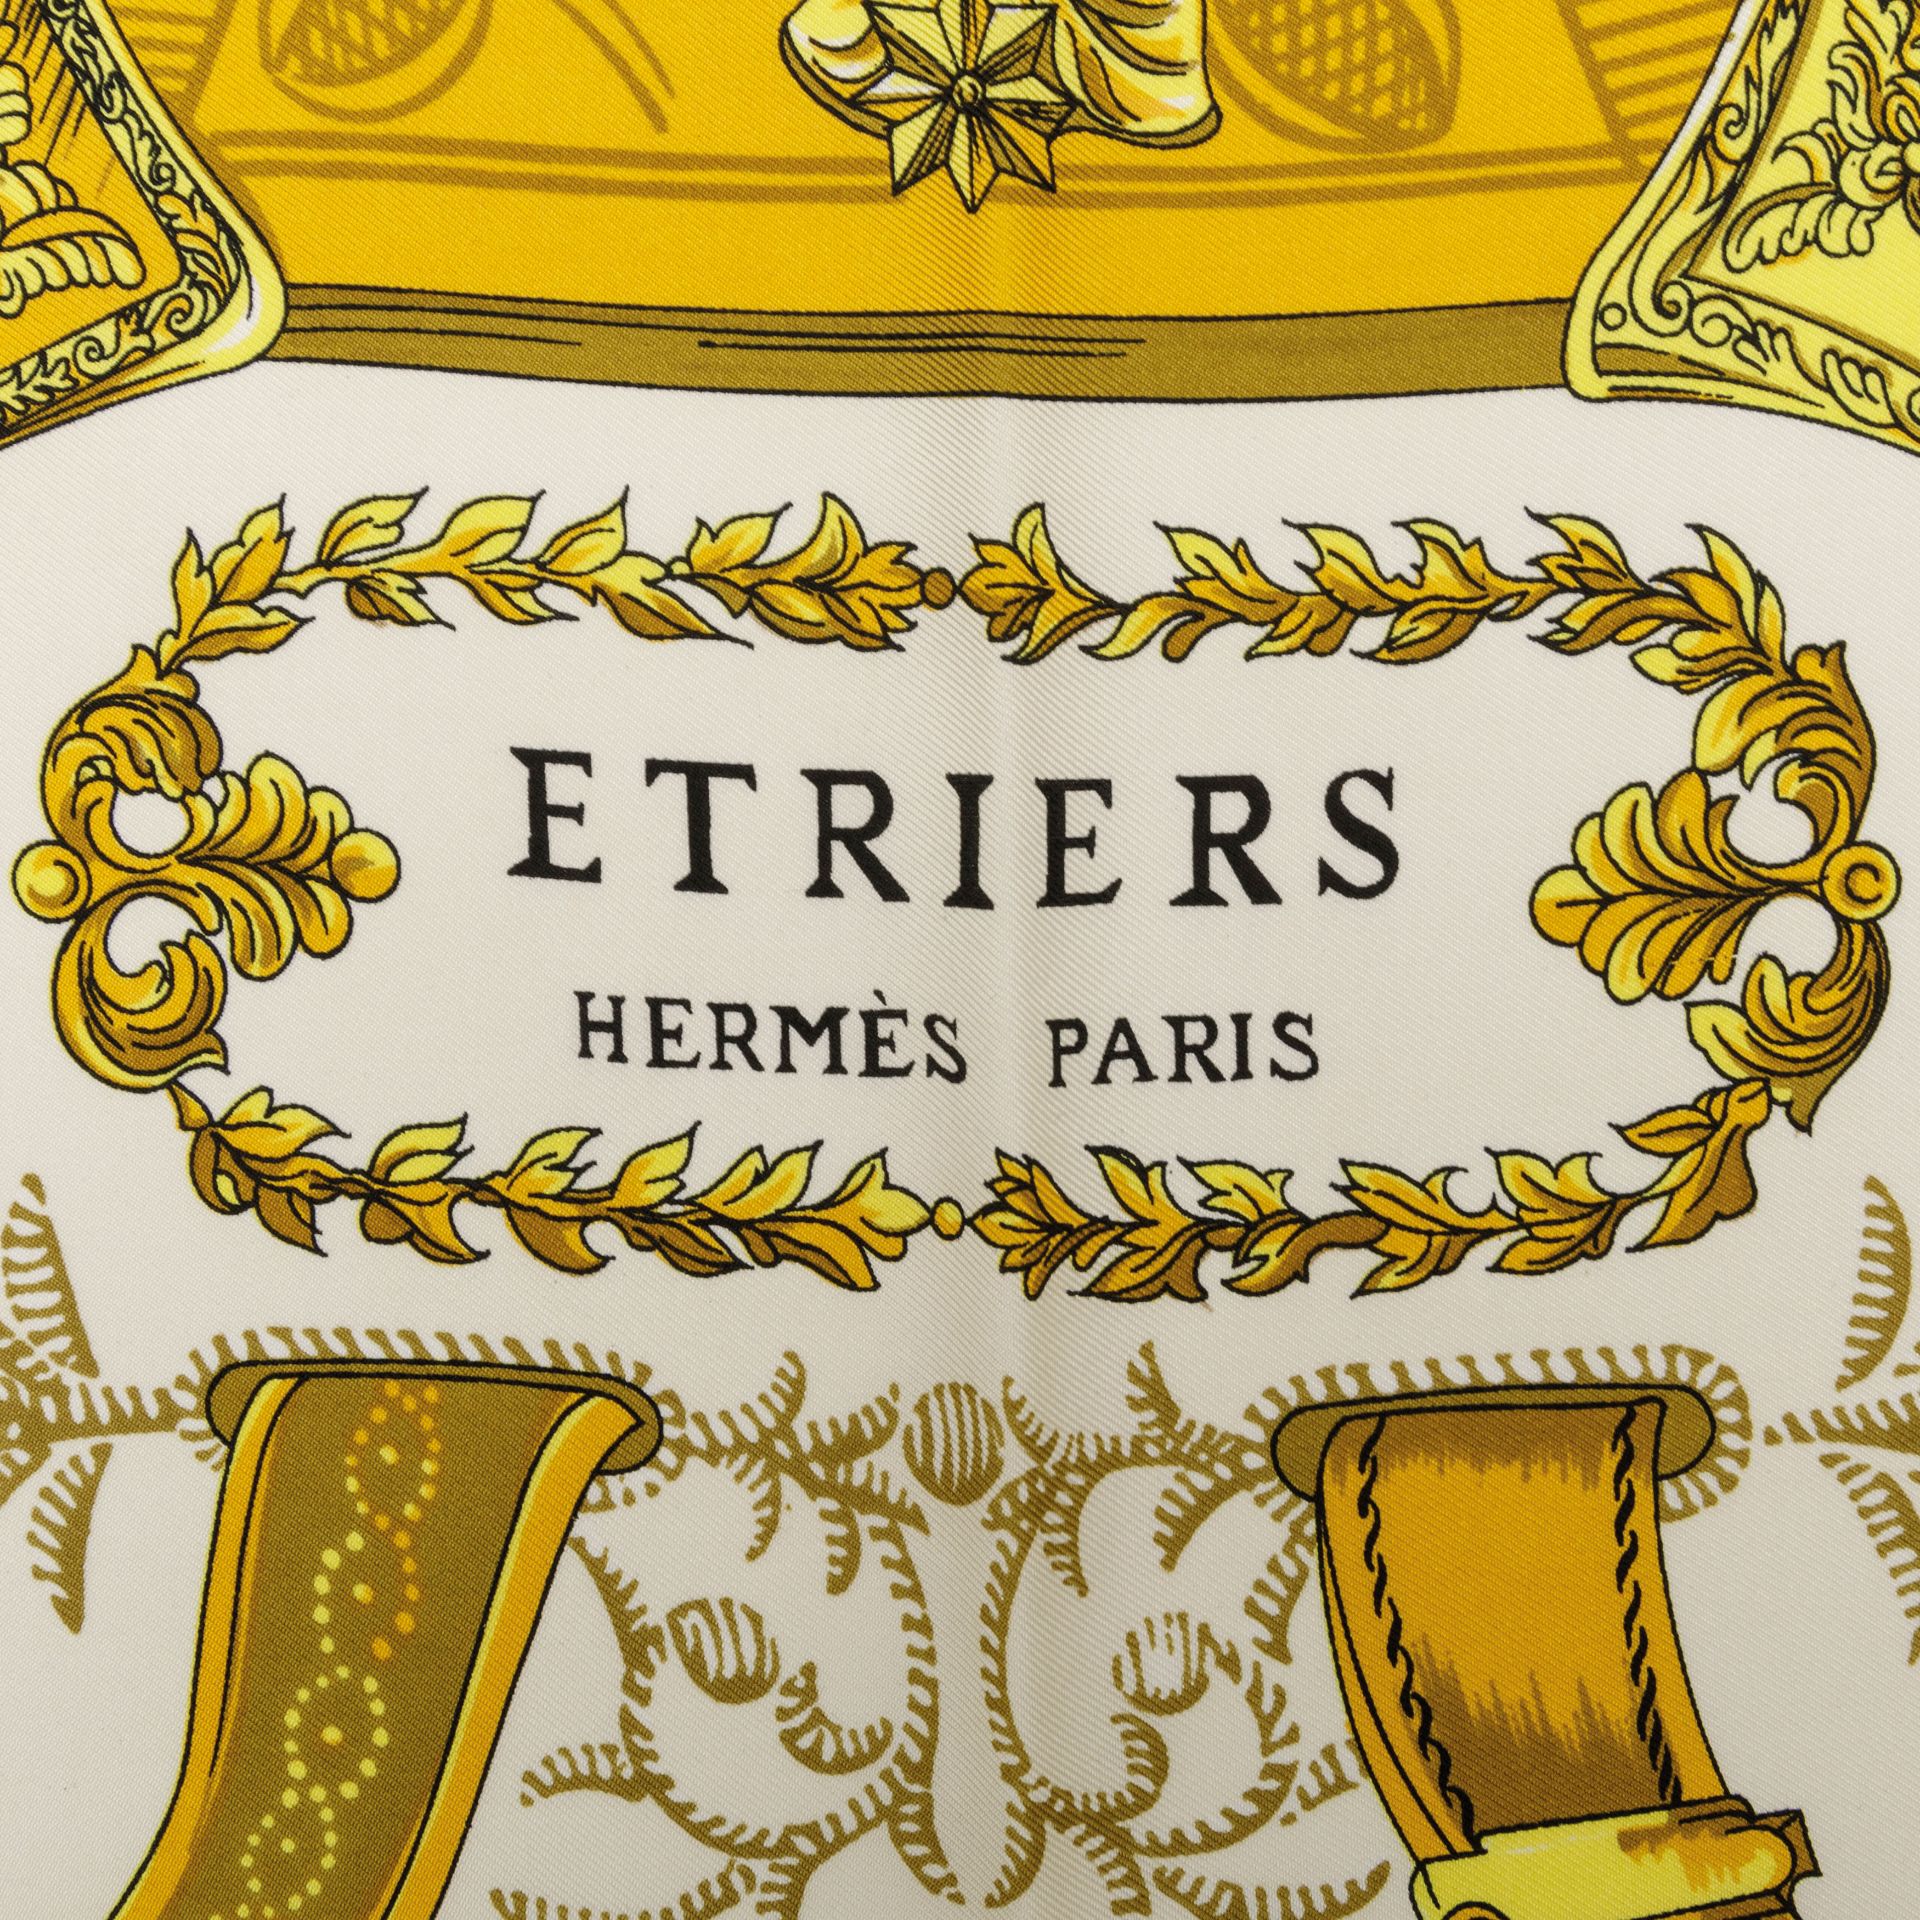 HERMÈS PARIS - Image 3 of 3